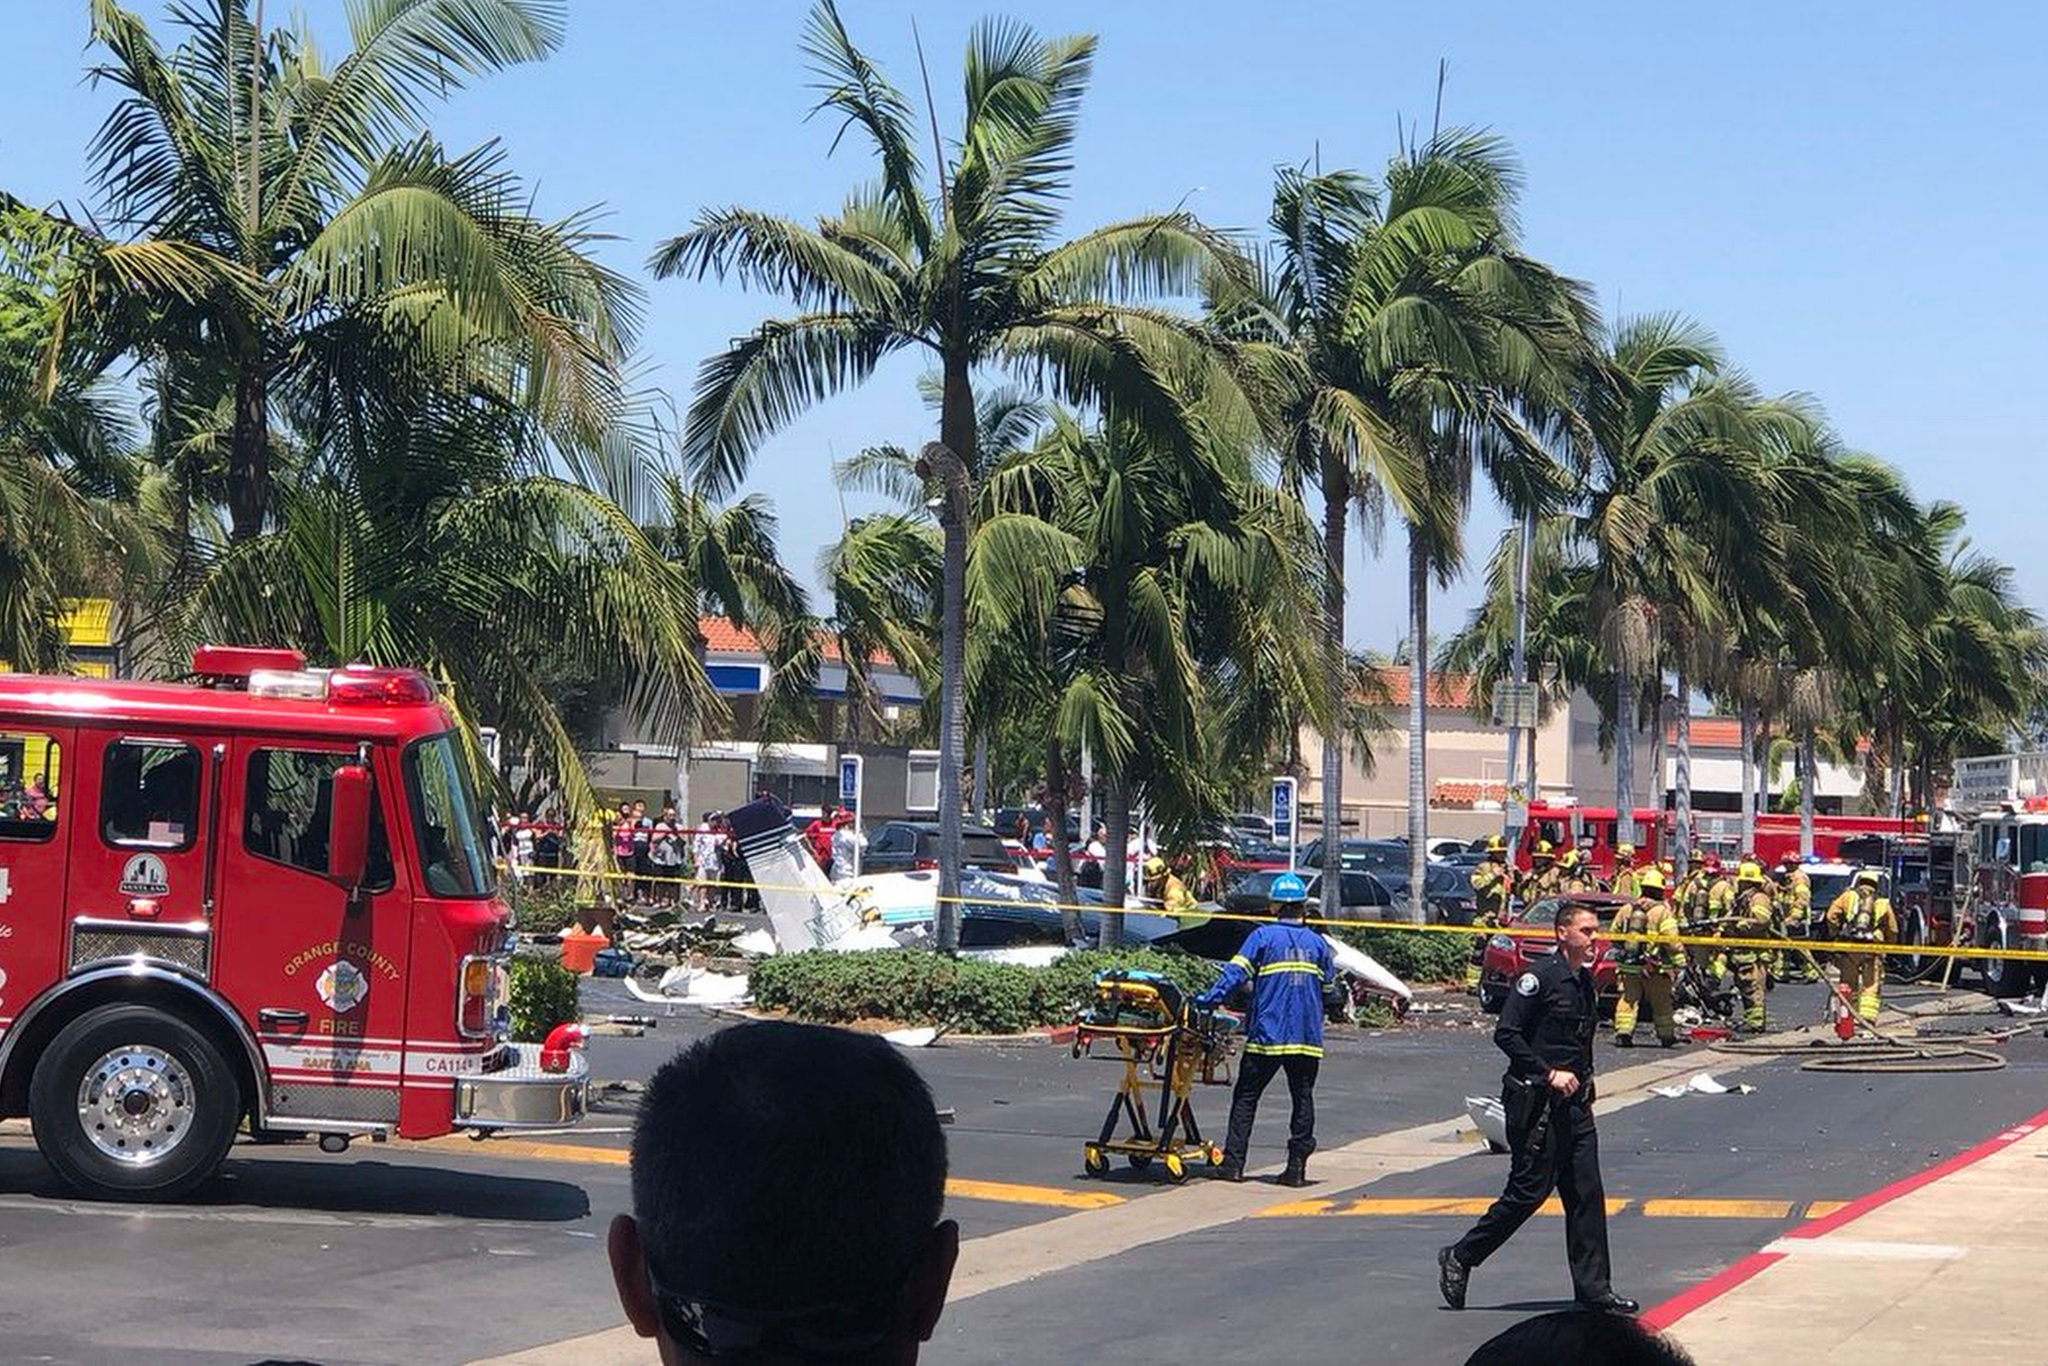 A twin-engine aircraft crashed near the South Coast Plaza shopping center in Santa Ana, Calif.,Aug. 5, 2018. [Photo: AP]